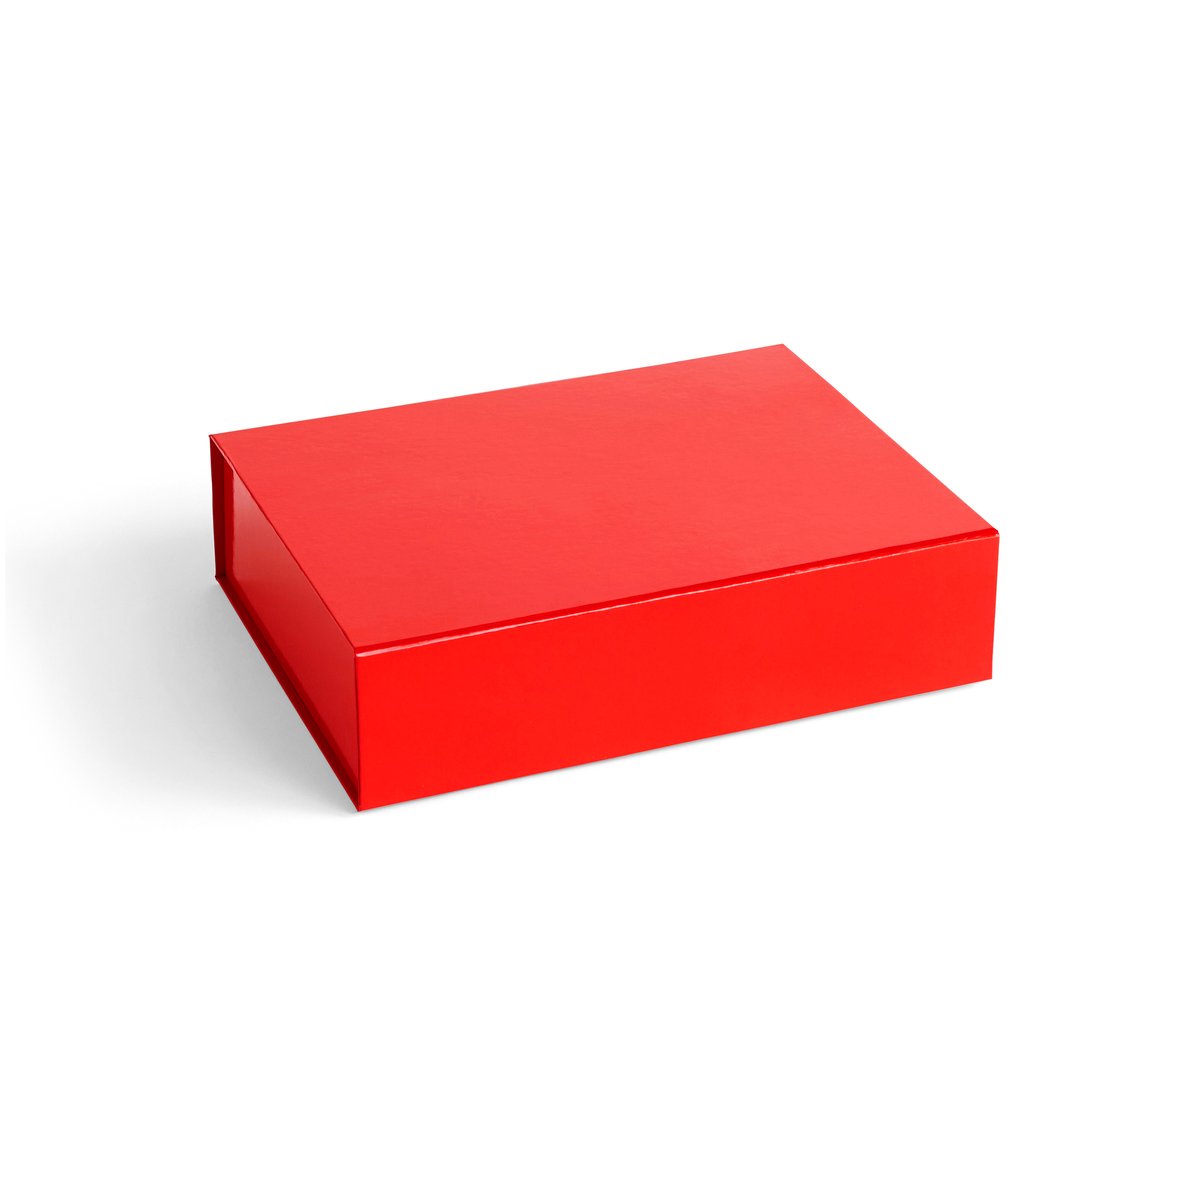 HAY Colour Storage S kannellinen laatikko 25,5×33 cm Vibrant red